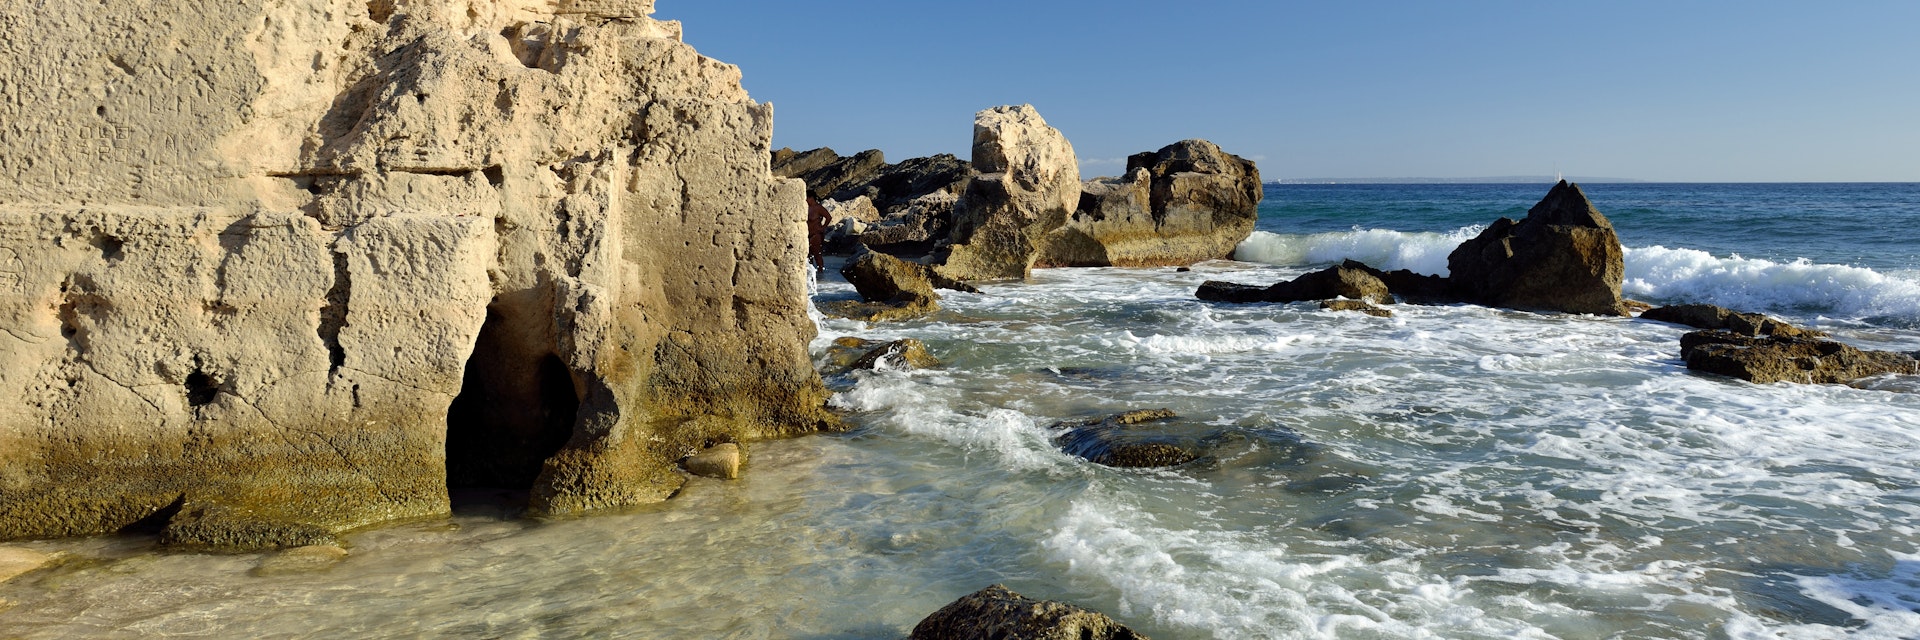 Stone beach Salines on Ibiza. Balearic Islands. Spain; Shutterstock ID 1387168433; your: Sloane Tucker; gl: 65050; netsuite: Online Editorial; full: POI
1387168433